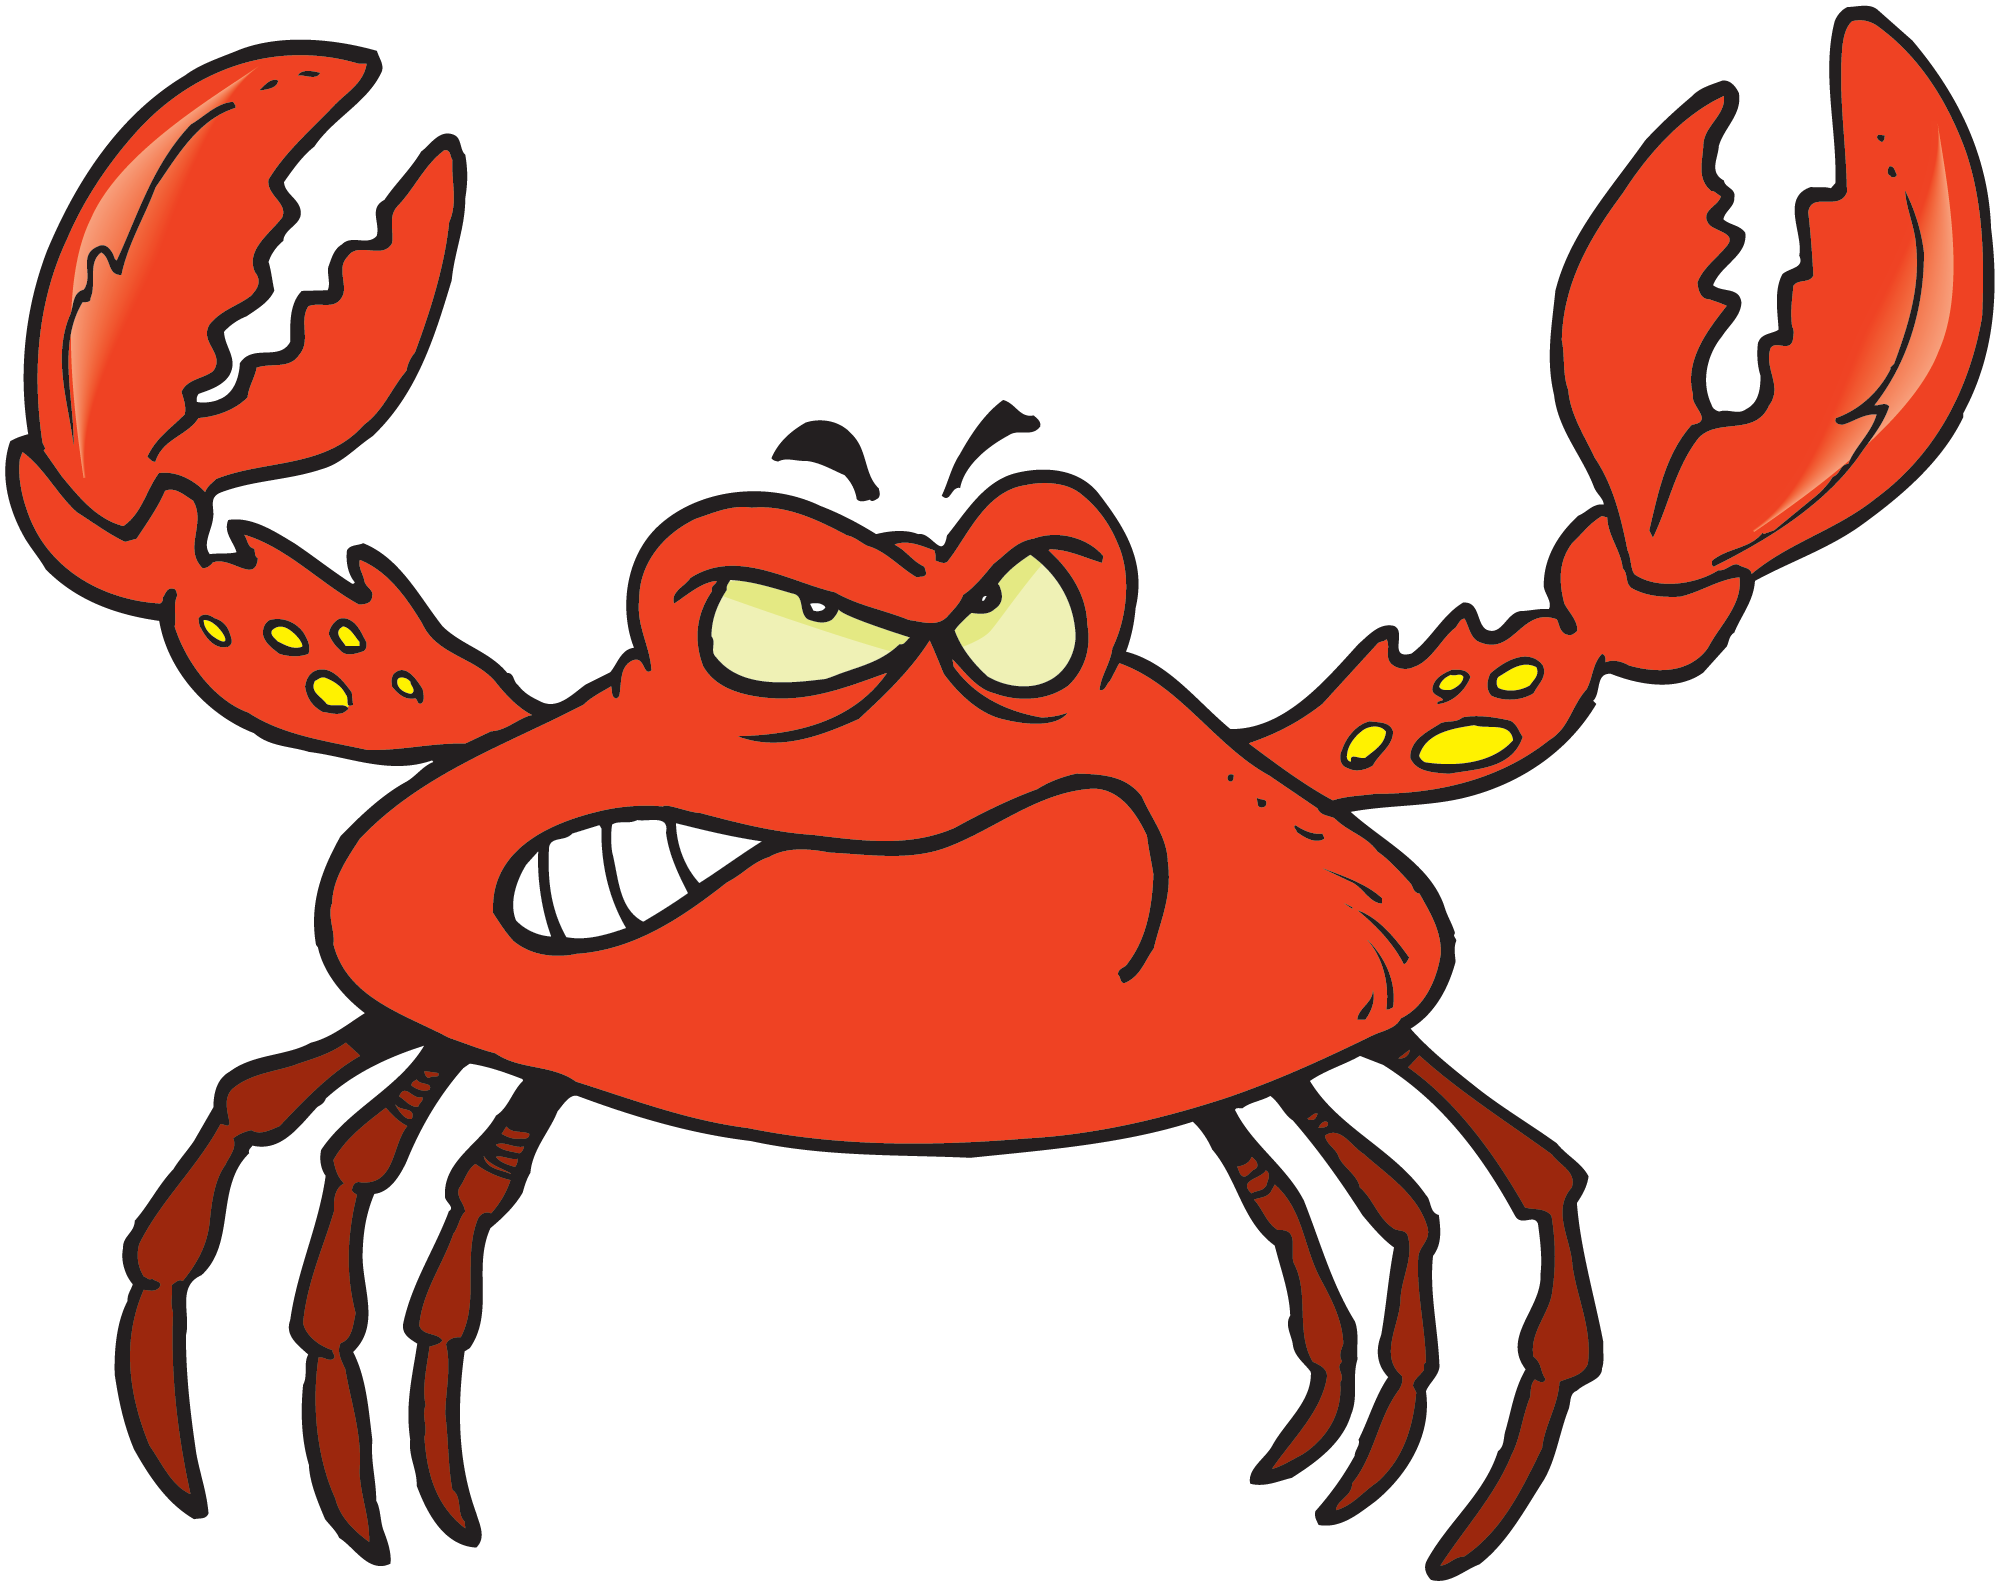 Free Cliparts Cartoon Crabs, Download Free Cliparts Cartoon Crabs png images, Free ClipArts on